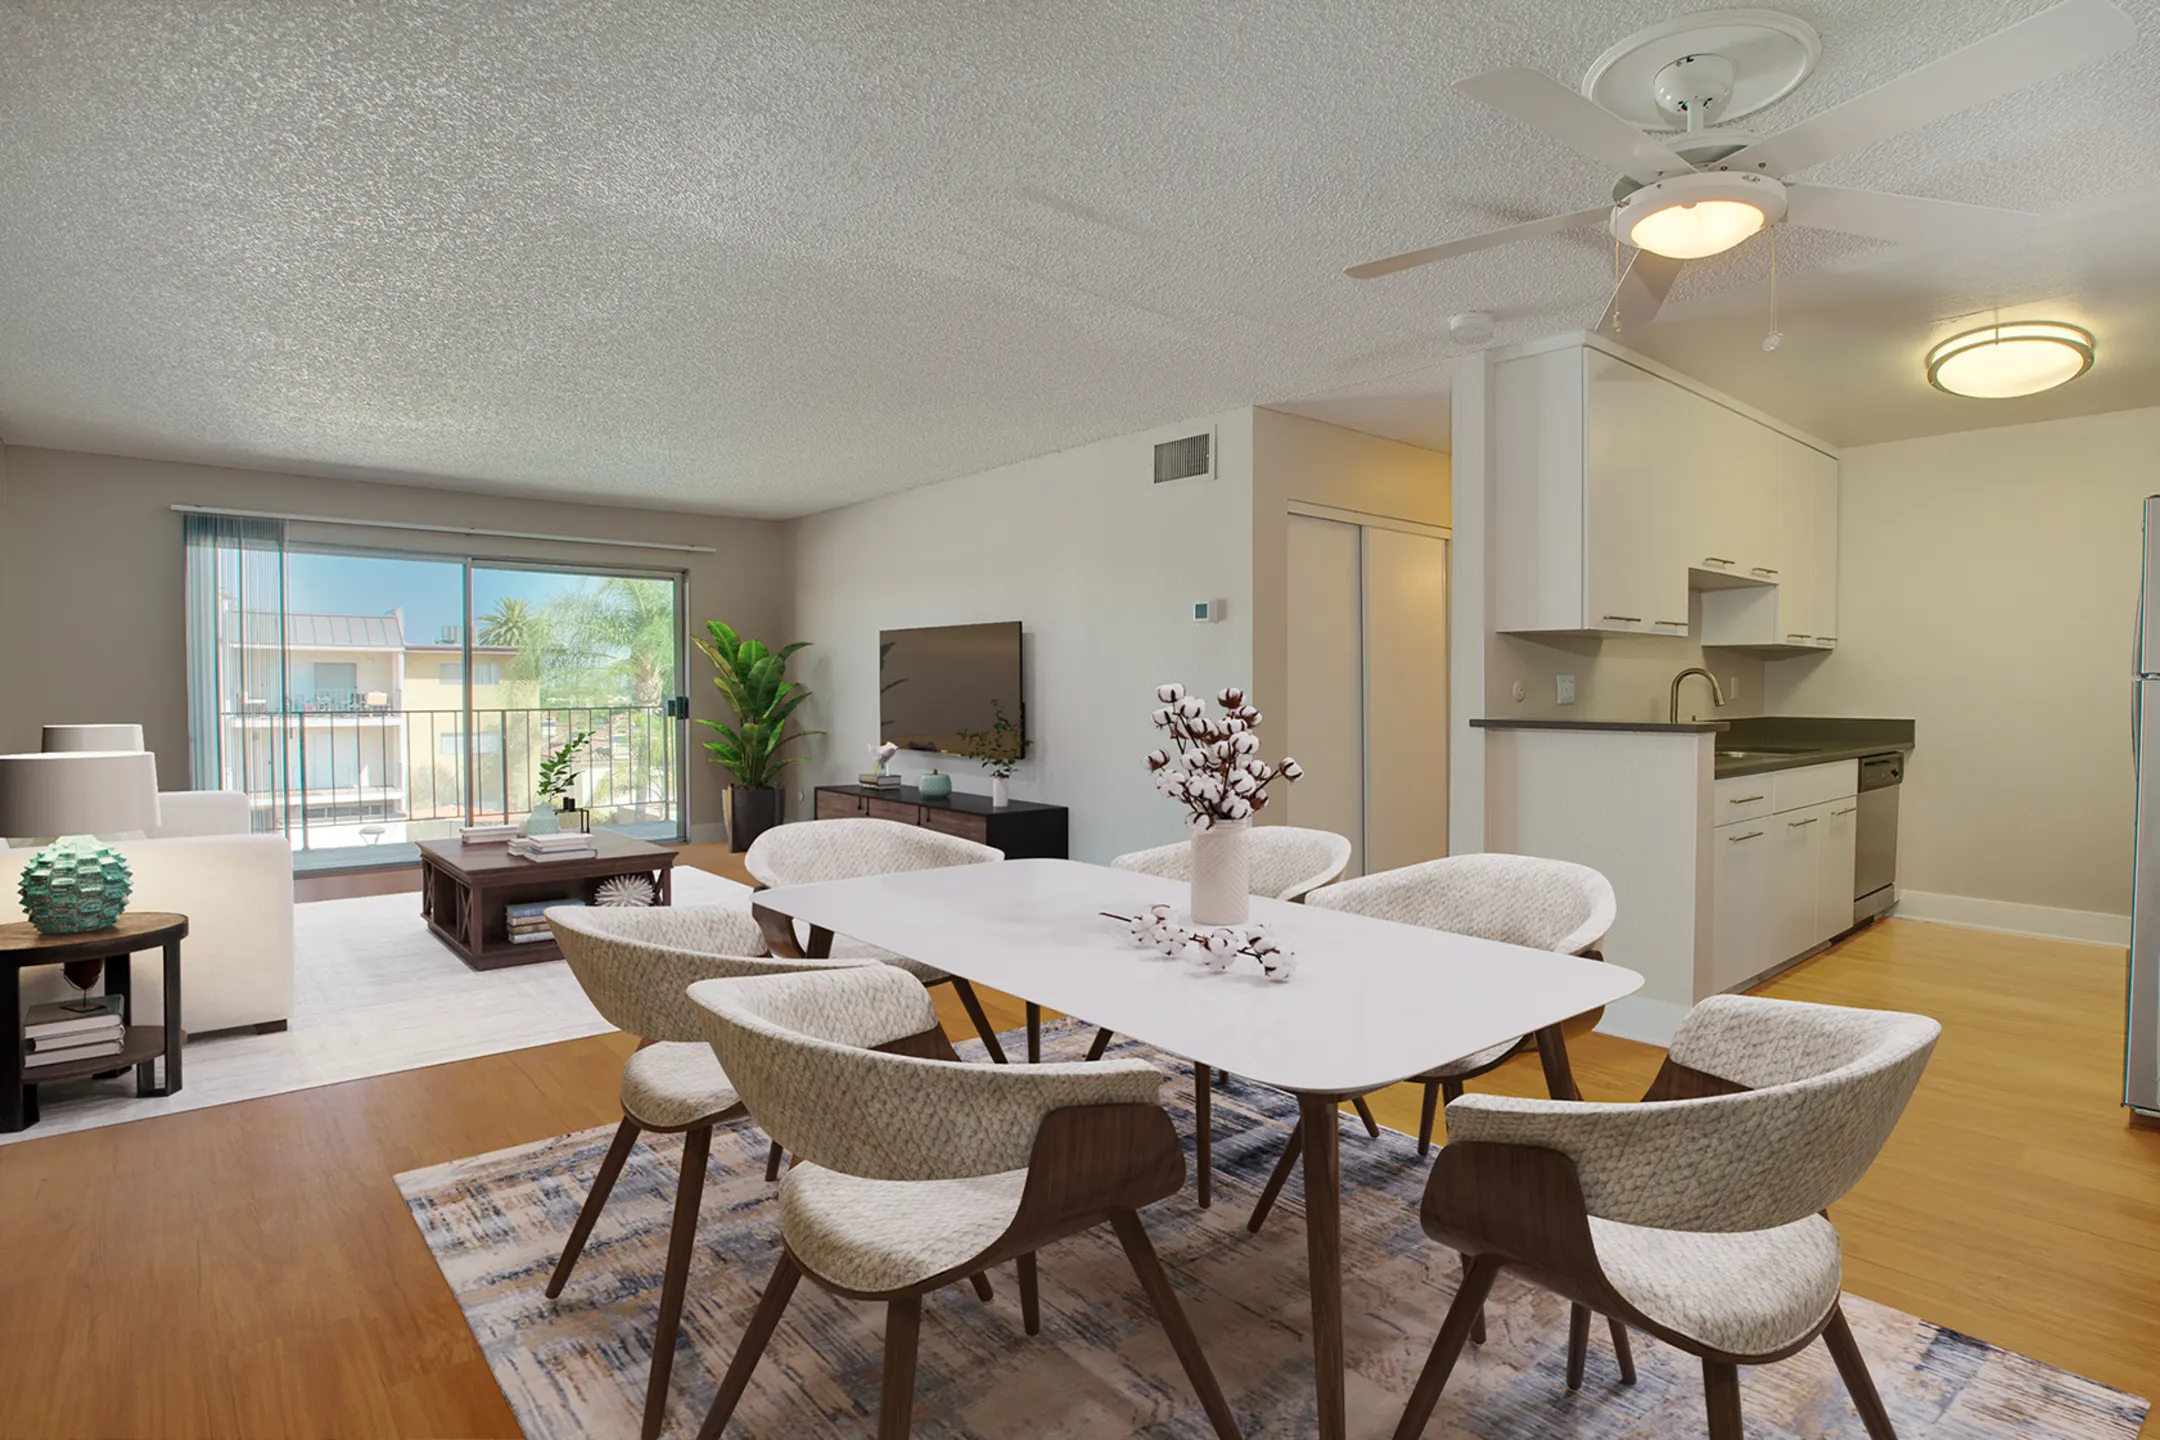 Dining Room - Villas of Pasadena Apartment Homes - Pasadena, CA